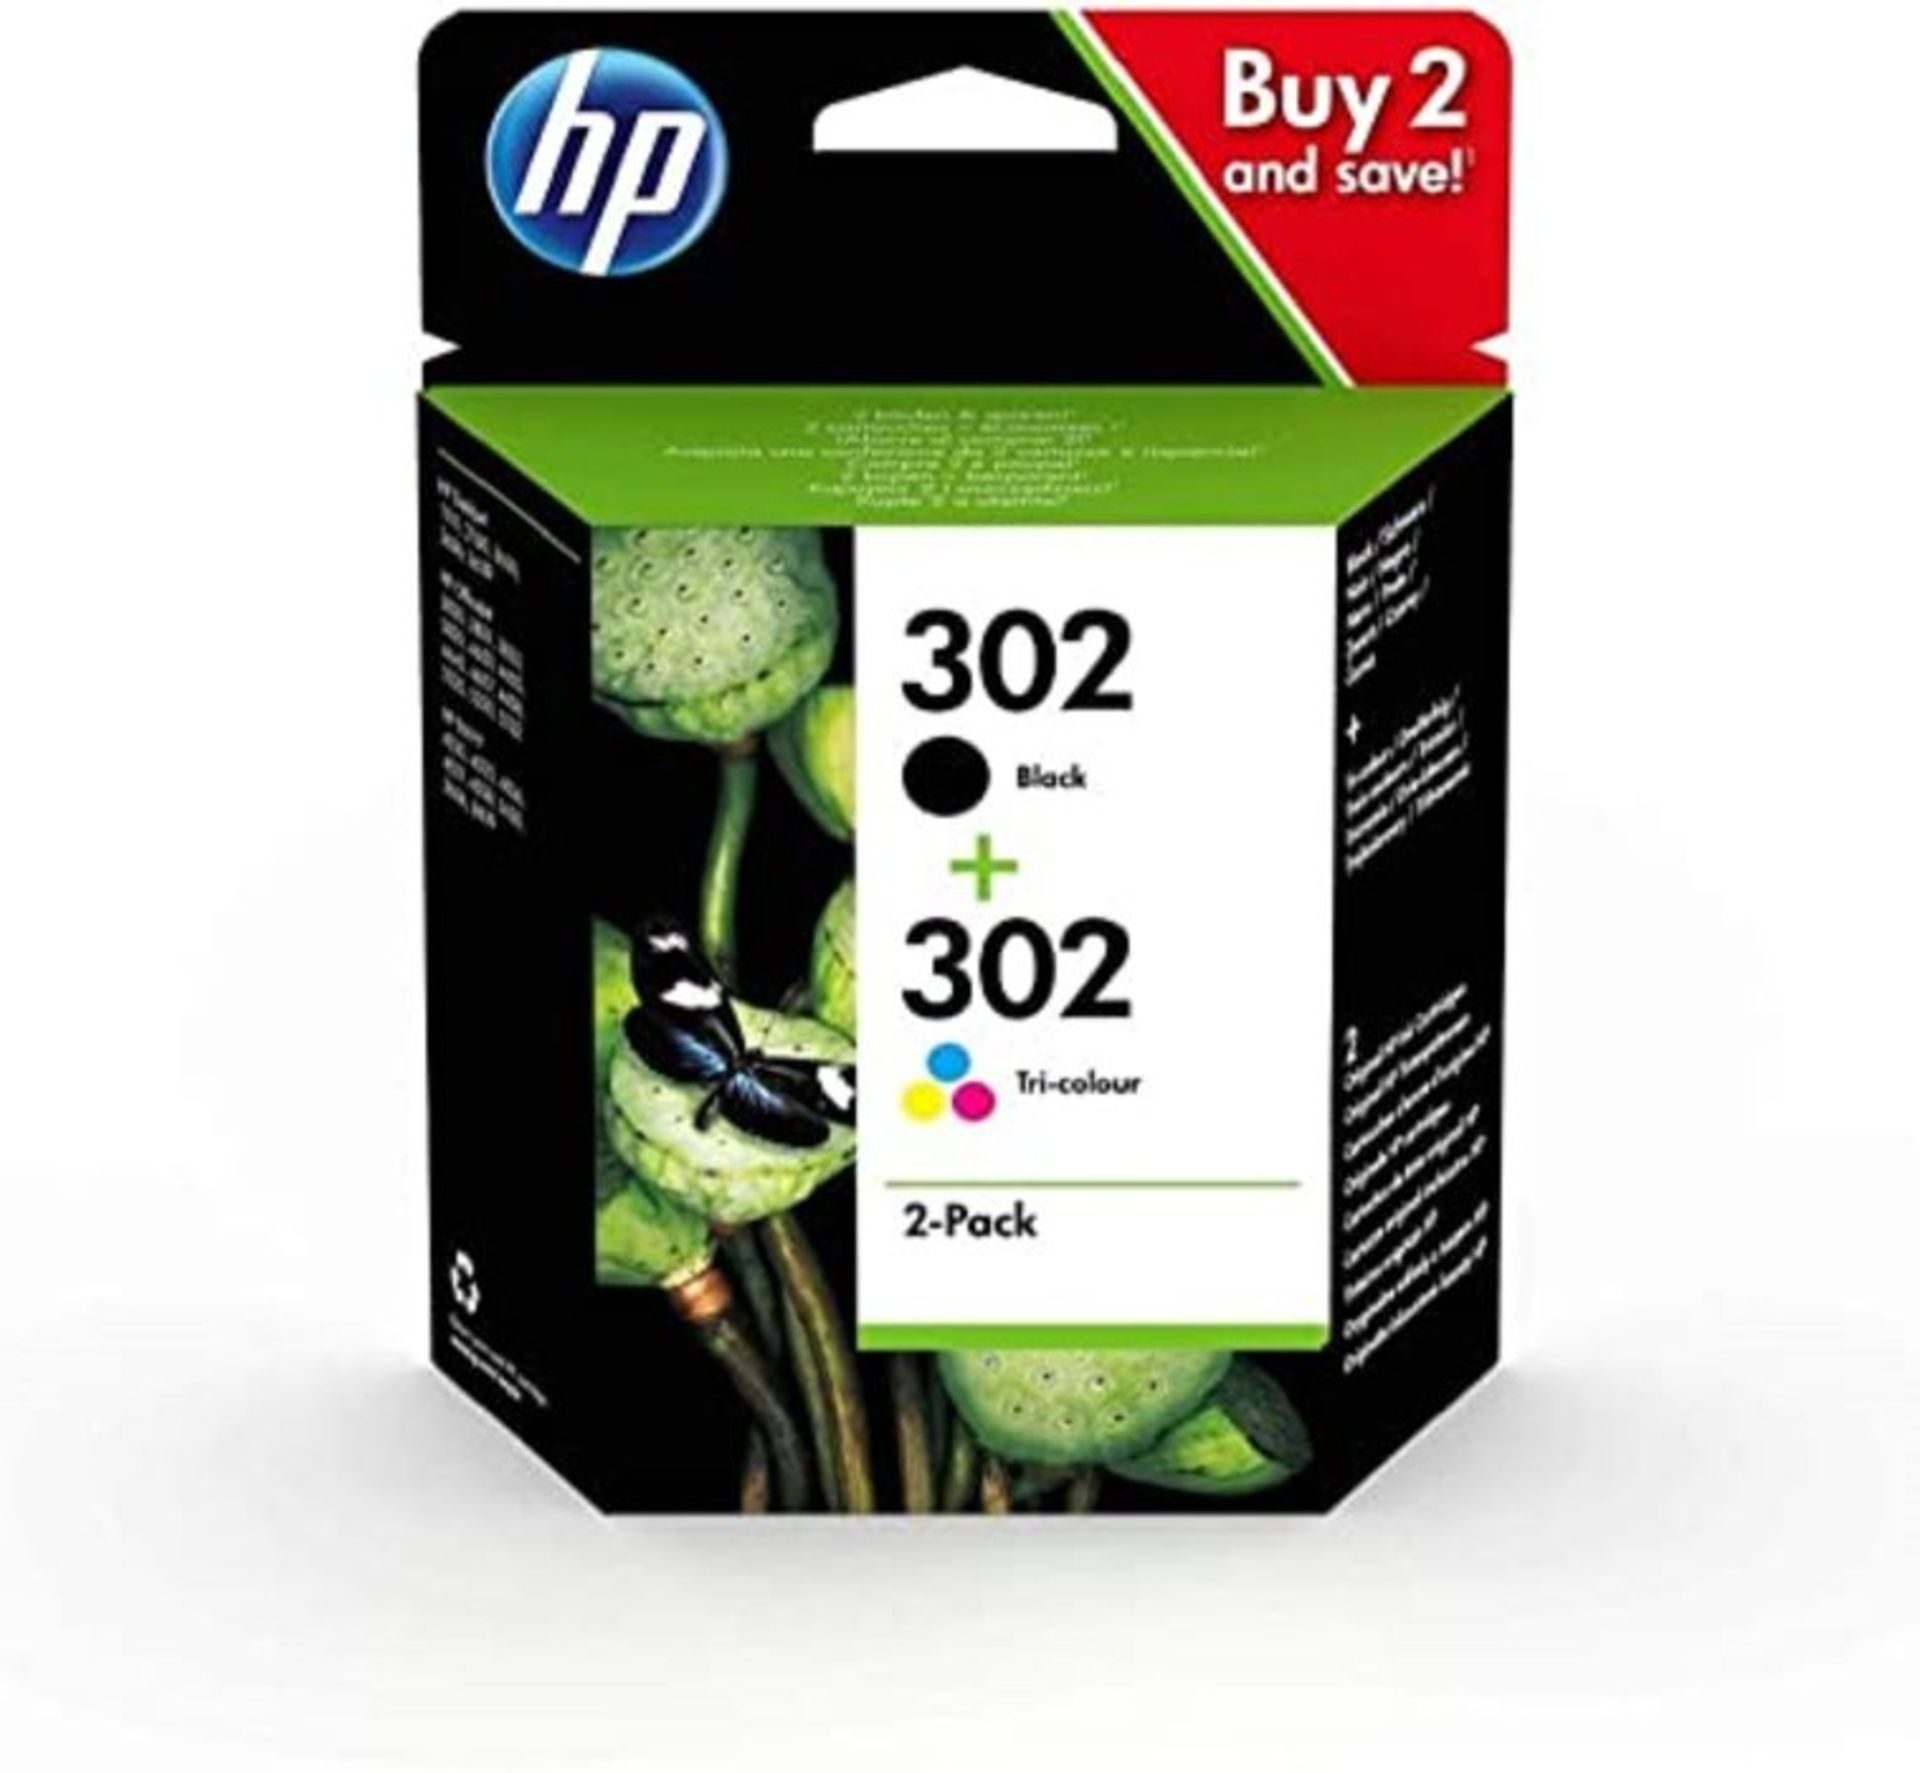 HP X4D37AE 302 Original Ink Cartridges, Black and Tri-colour, Multipack